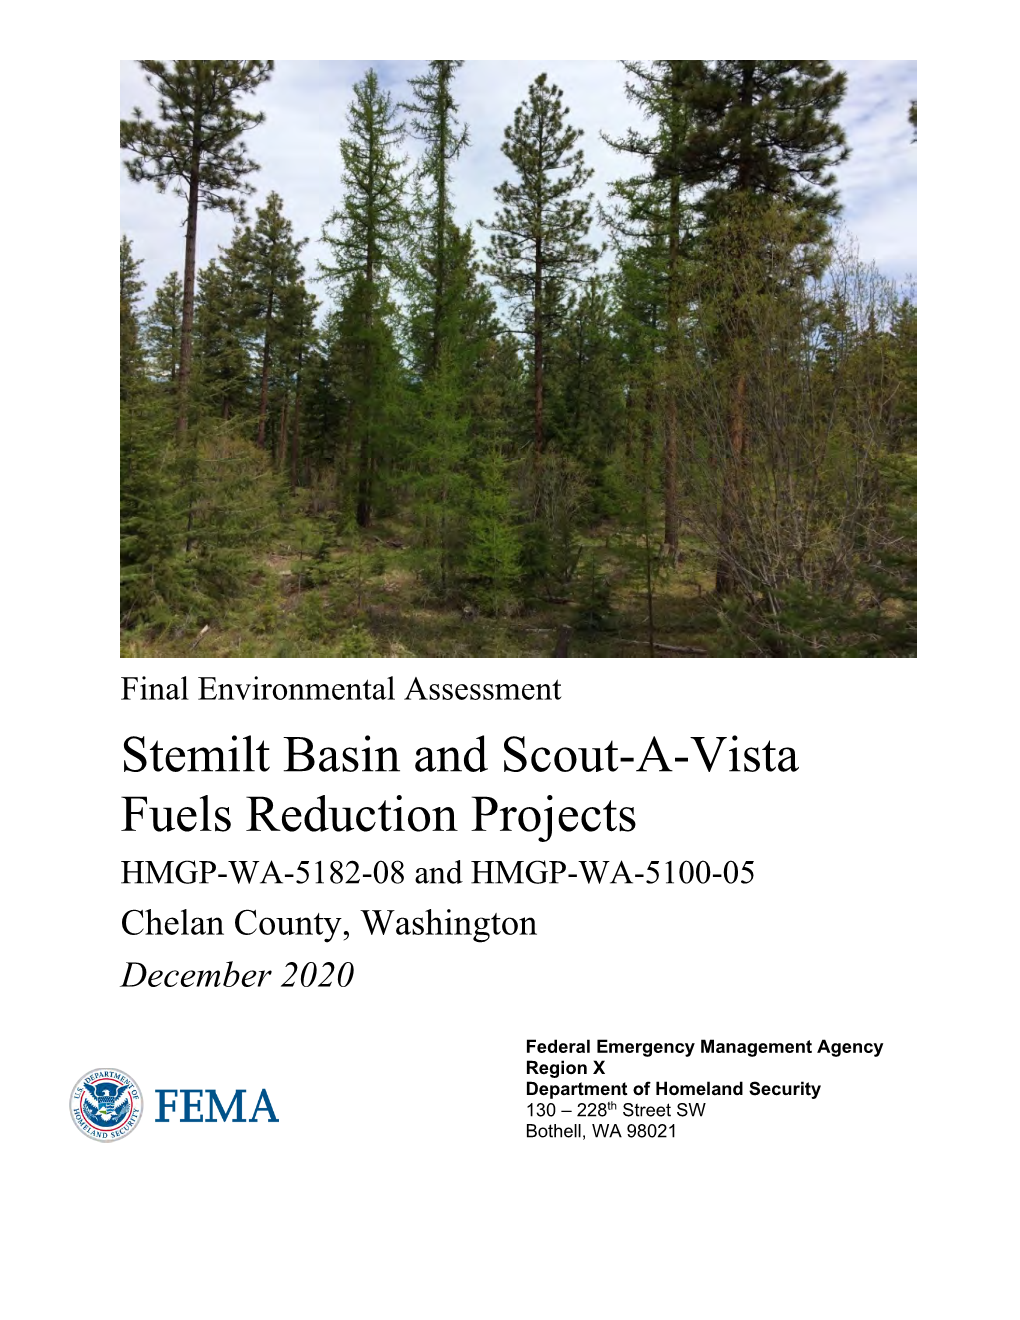 Stemilt Basin and Scout-A-Vista Fuels Reduction Projects HMGP-WA-5182-08 and HMGP-WA-5100-05 Chelan County, Washington December 2020